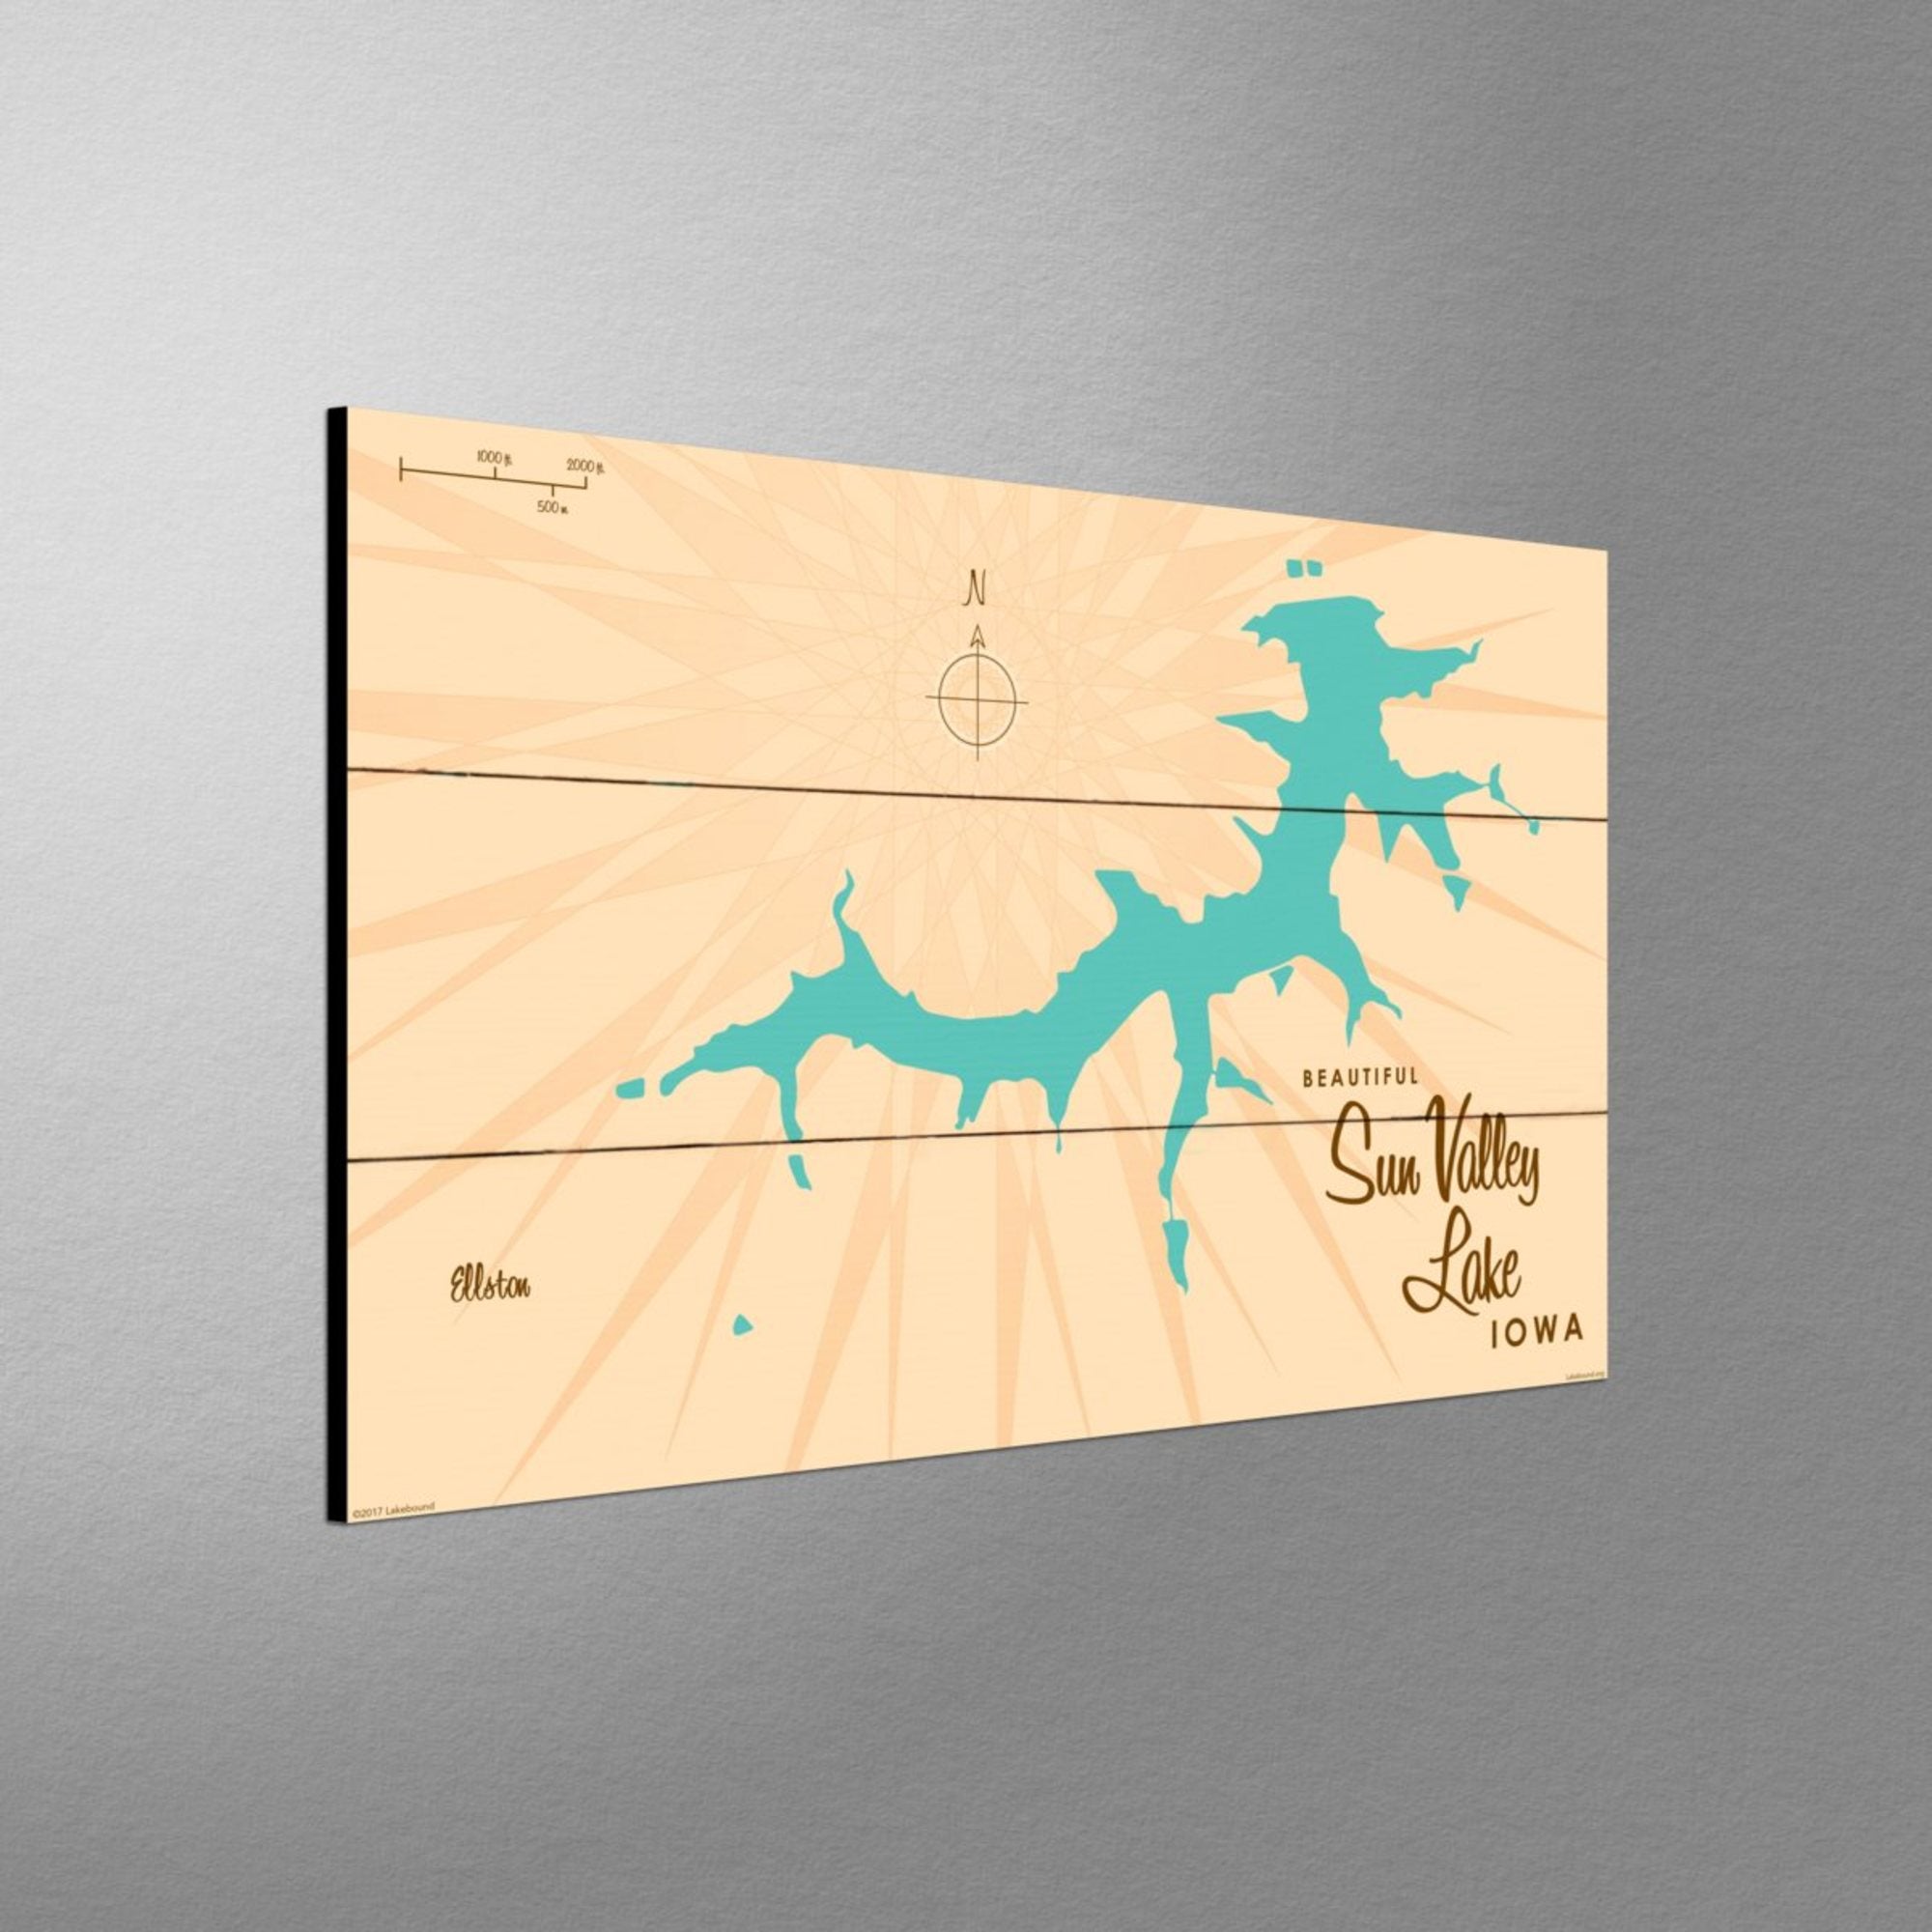 Sun Valley Lake Iowa, Wood Sign Map Art